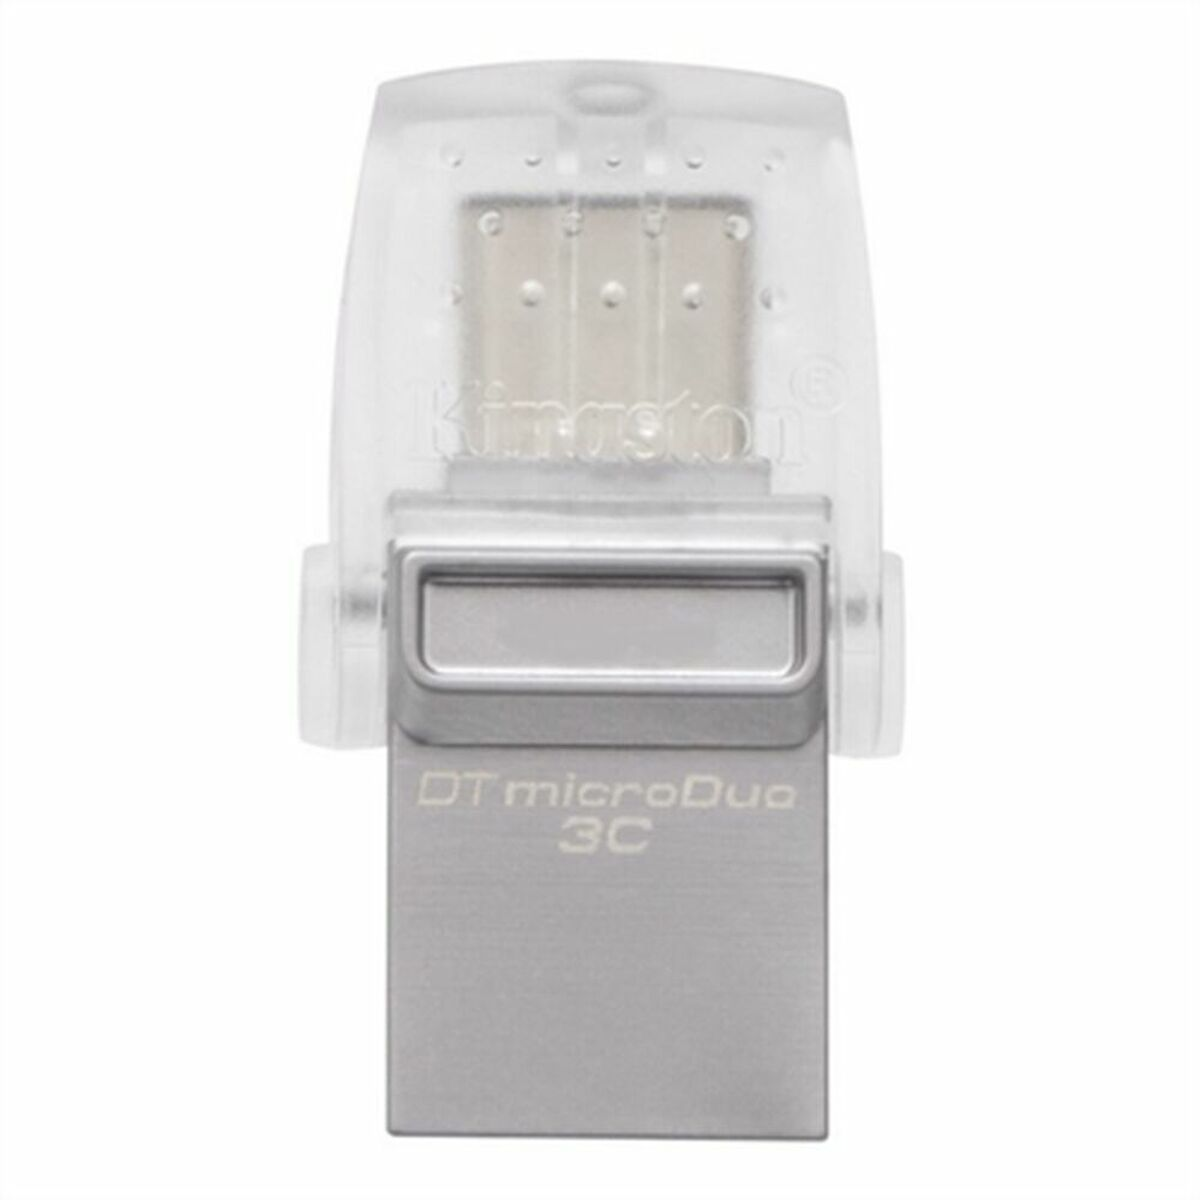 KINGSTON DT MicroDuo 3C 64 GB) USB-Flash-Laufwerk (violett/transparent